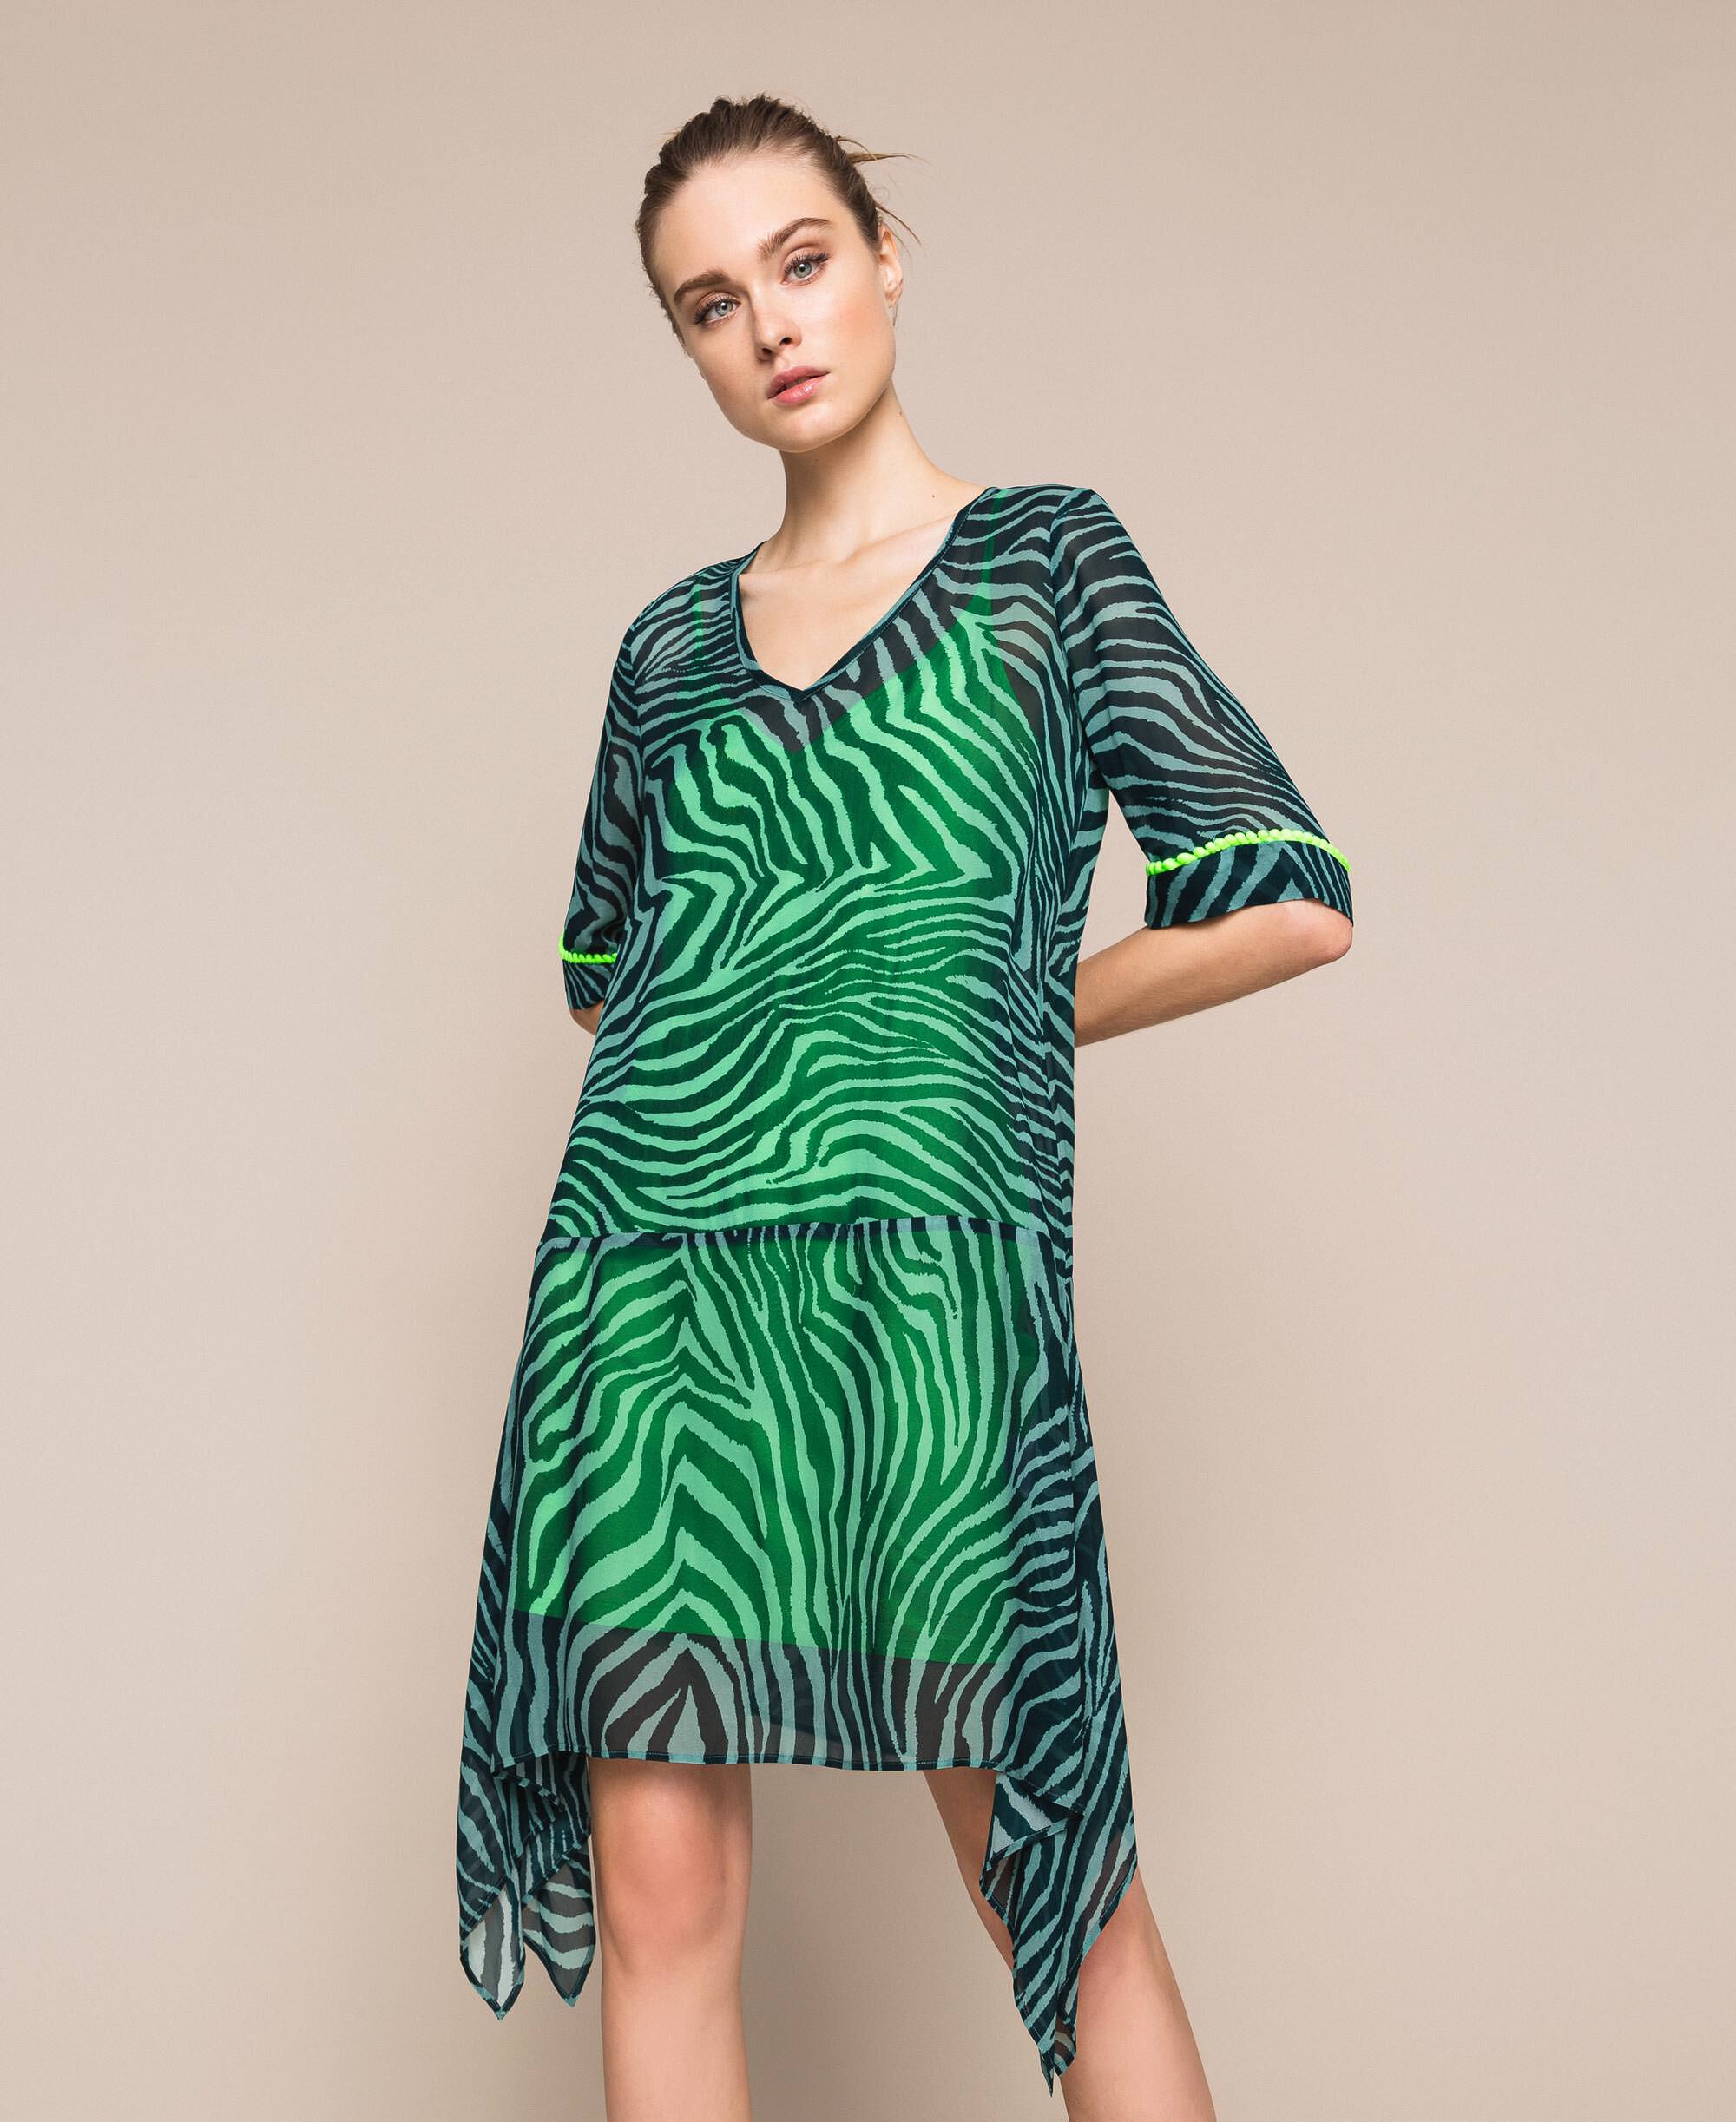 Green Zebra Dress Sale, 56% OFF | lagence.tv